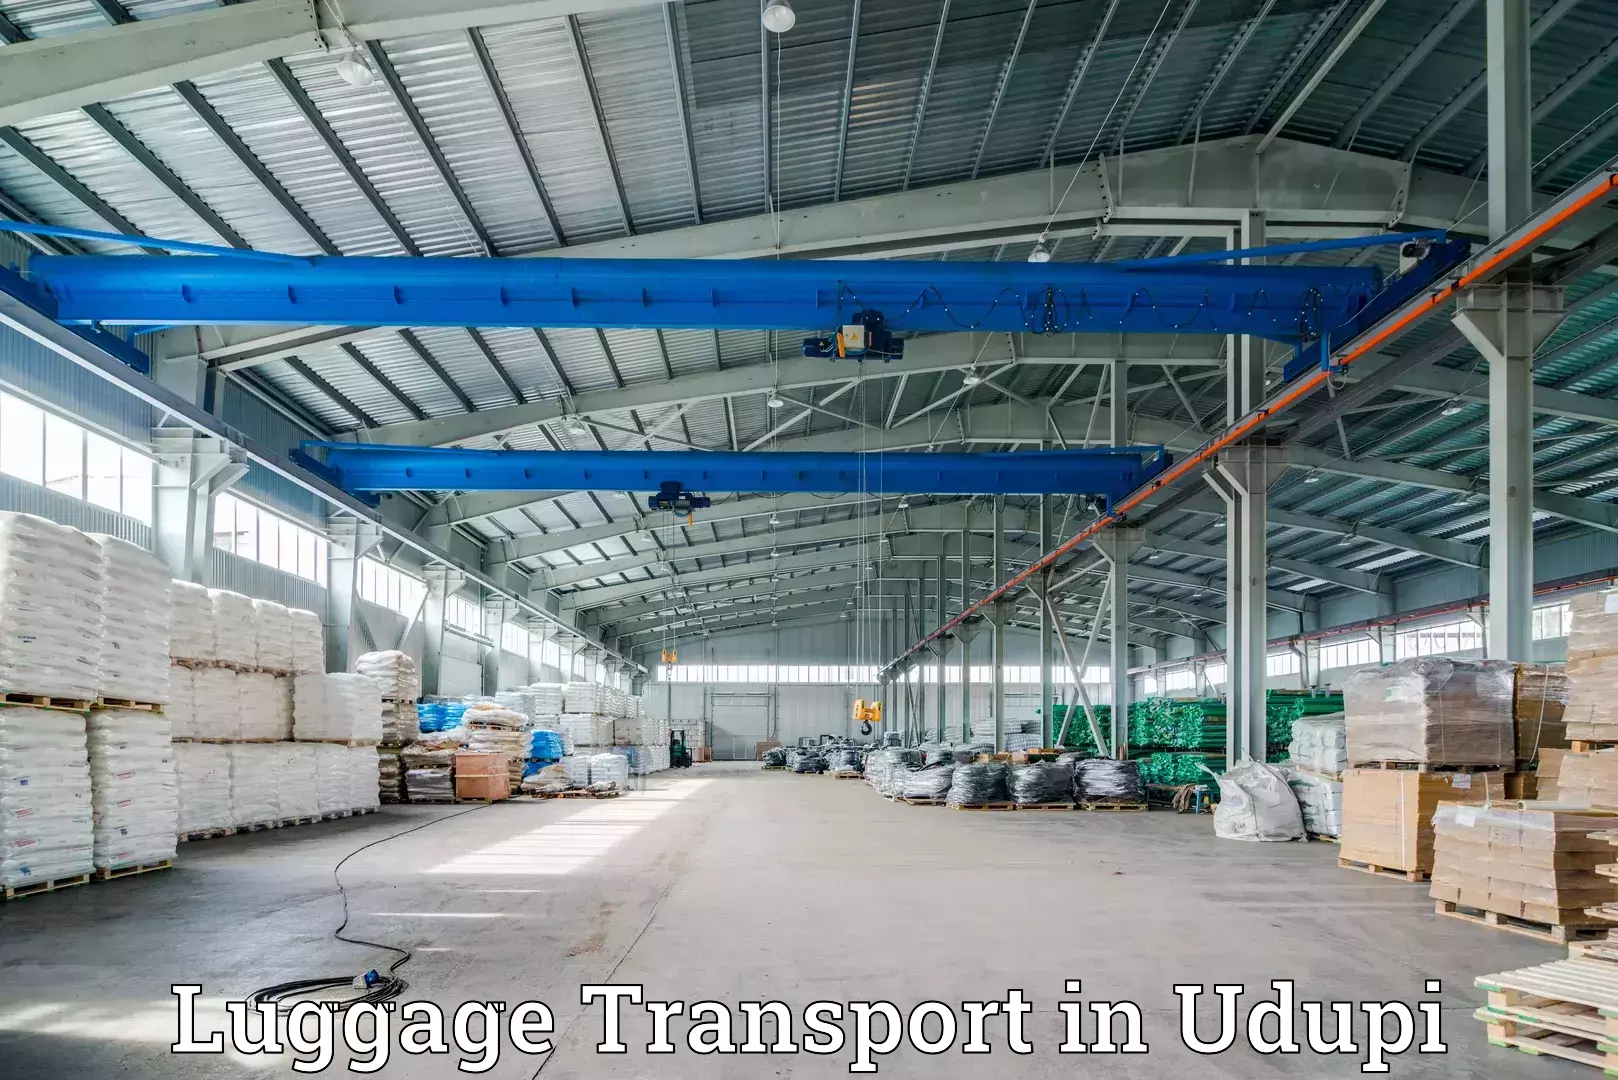 Luggage transport solutions in Udupi